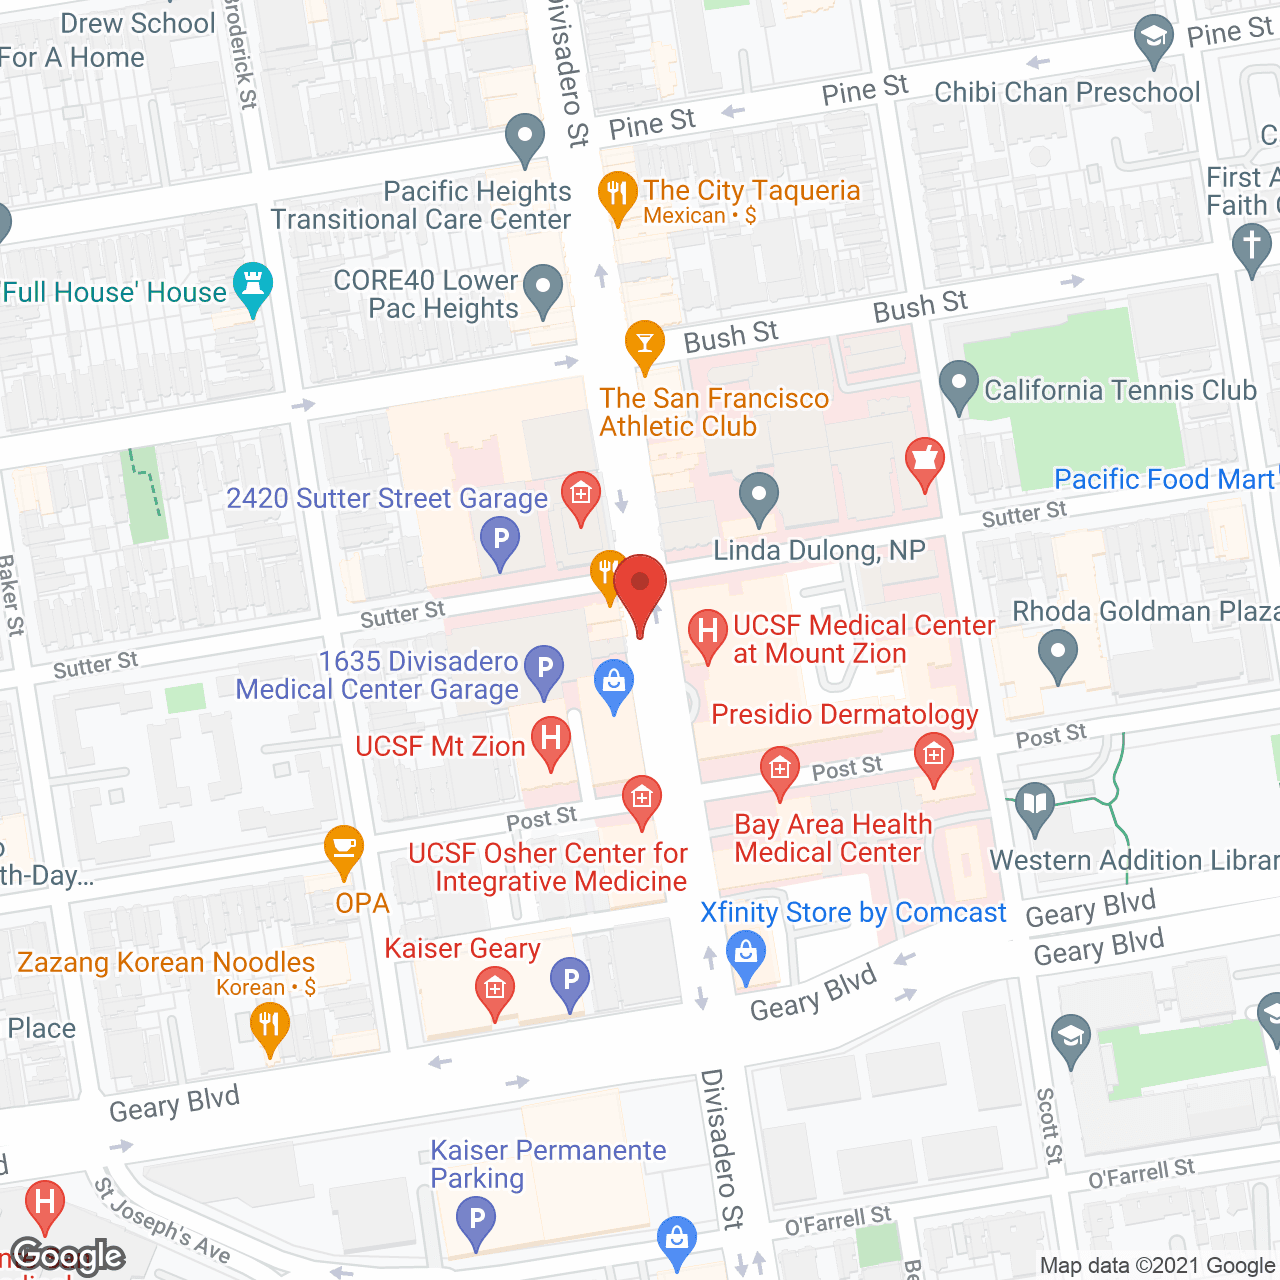 TheKey San Francisco in google map